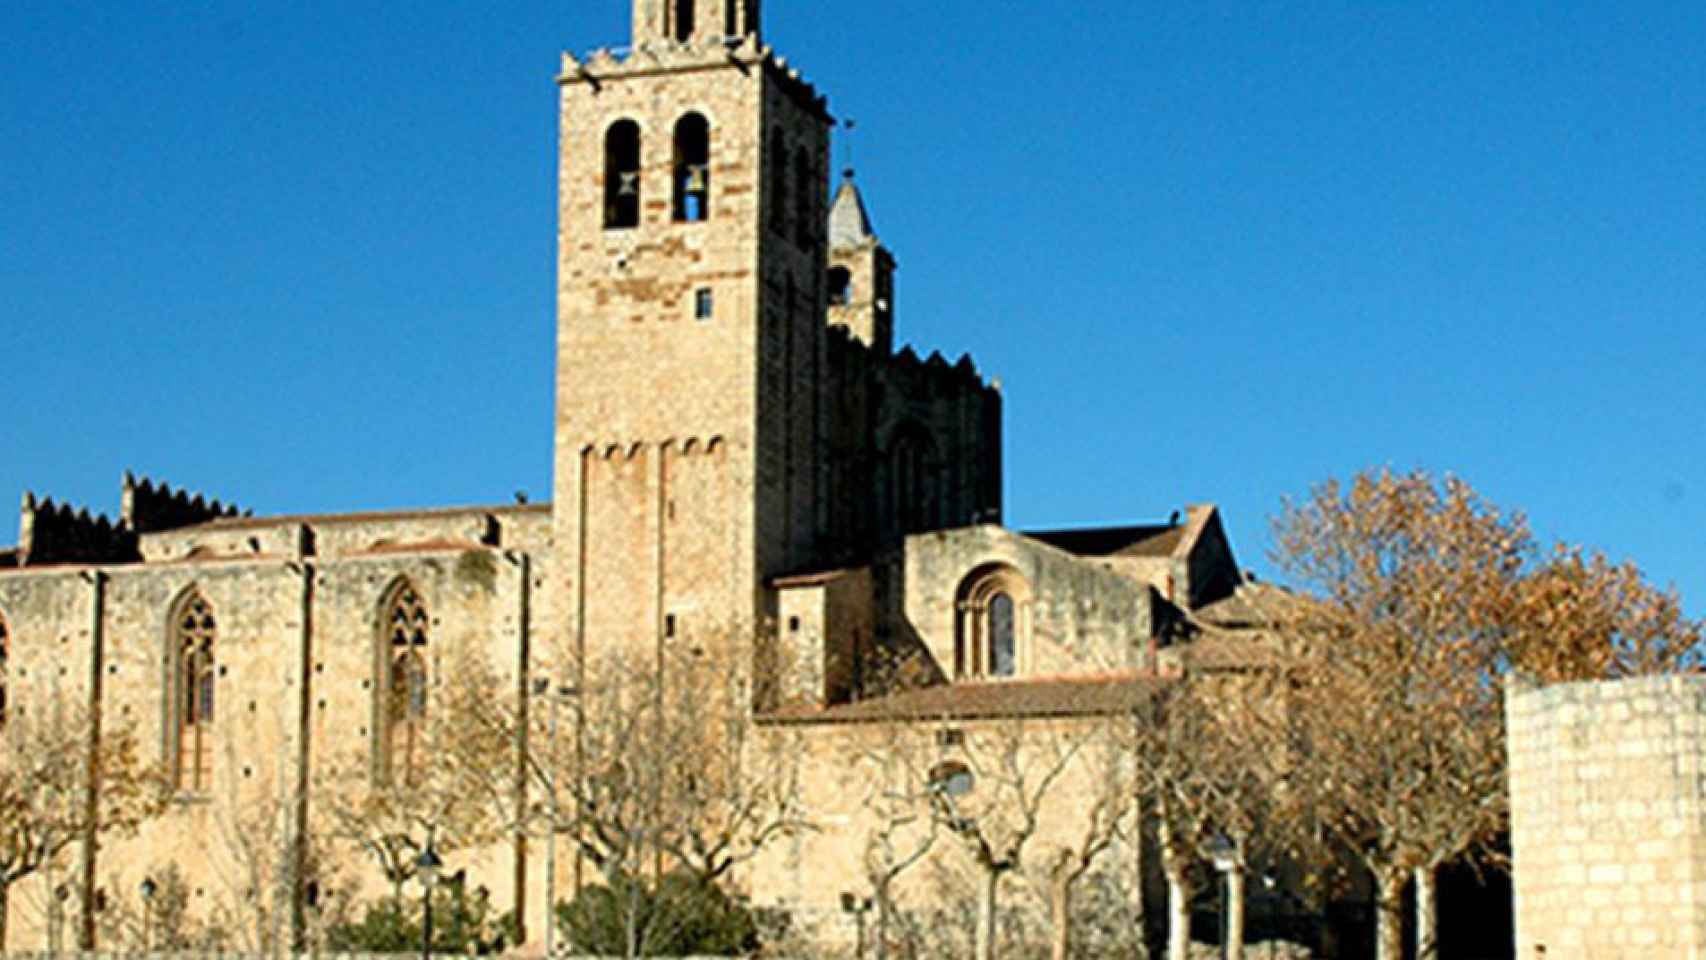 Monasterio de Sant Cugat del Vallès / CG